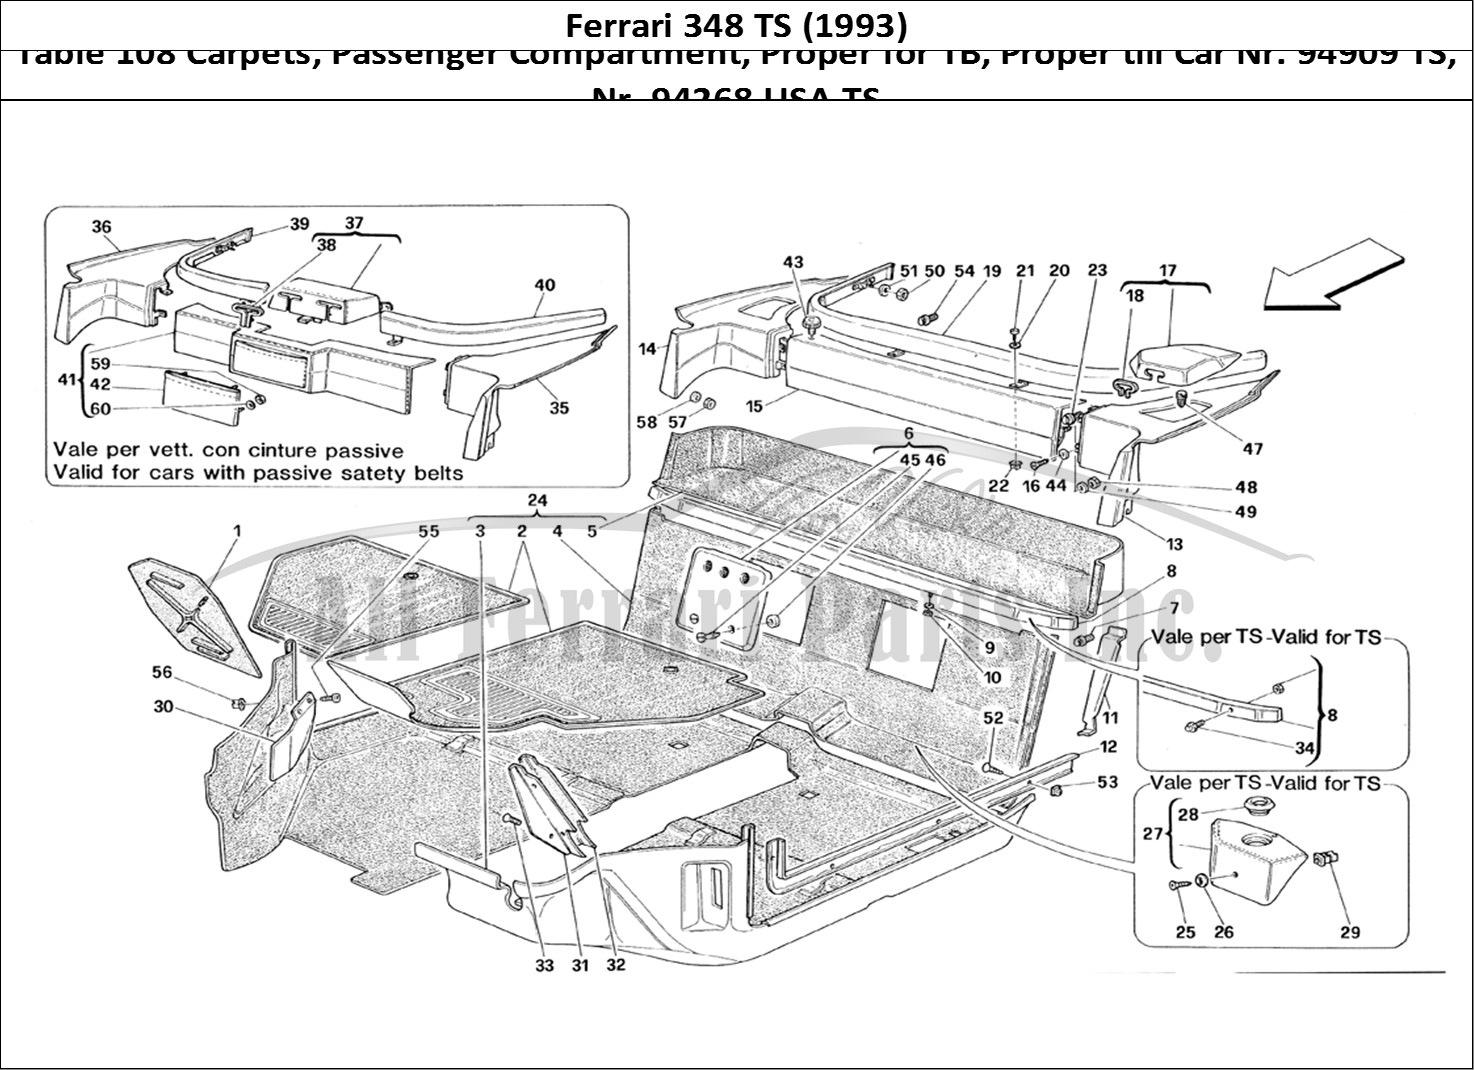 Ferrari Parts Ferrari 348 TB (1993) Page 108 Passengers Compartment Ca